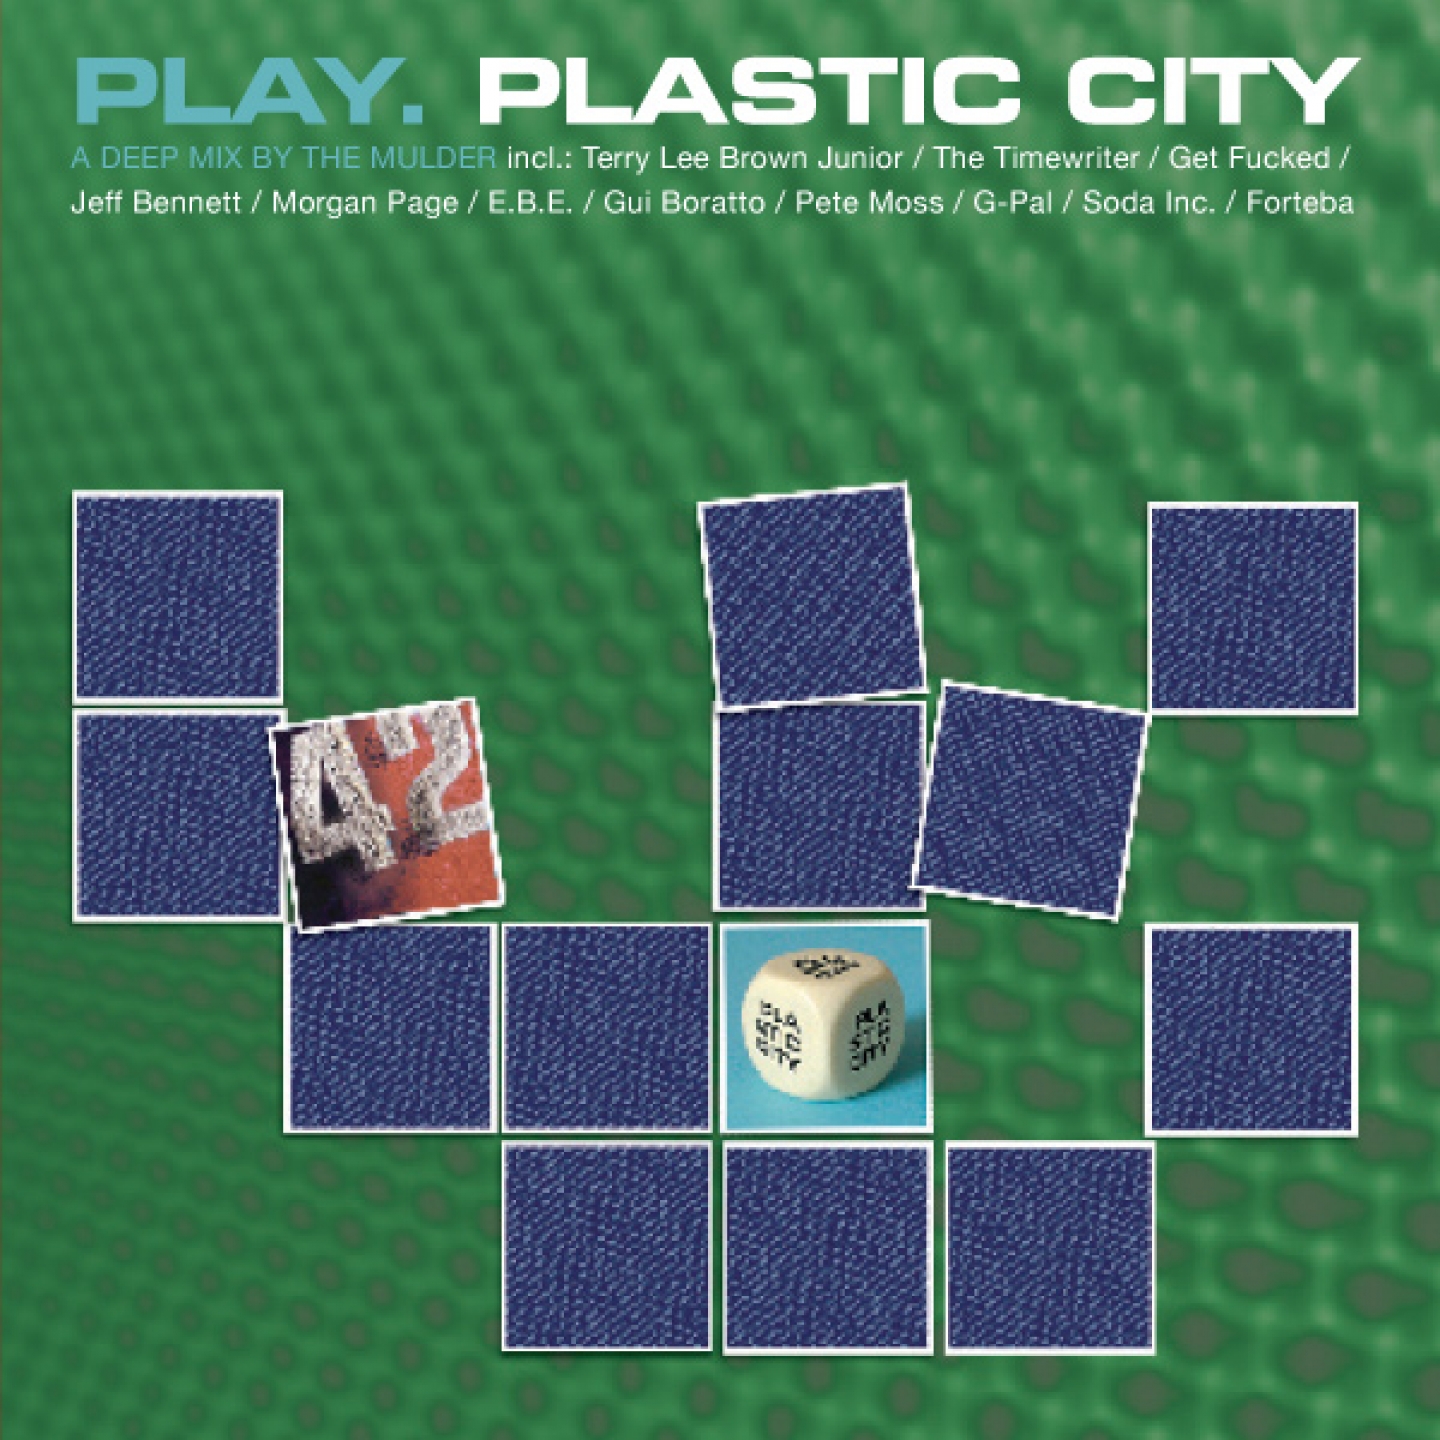 Play. Plastic City